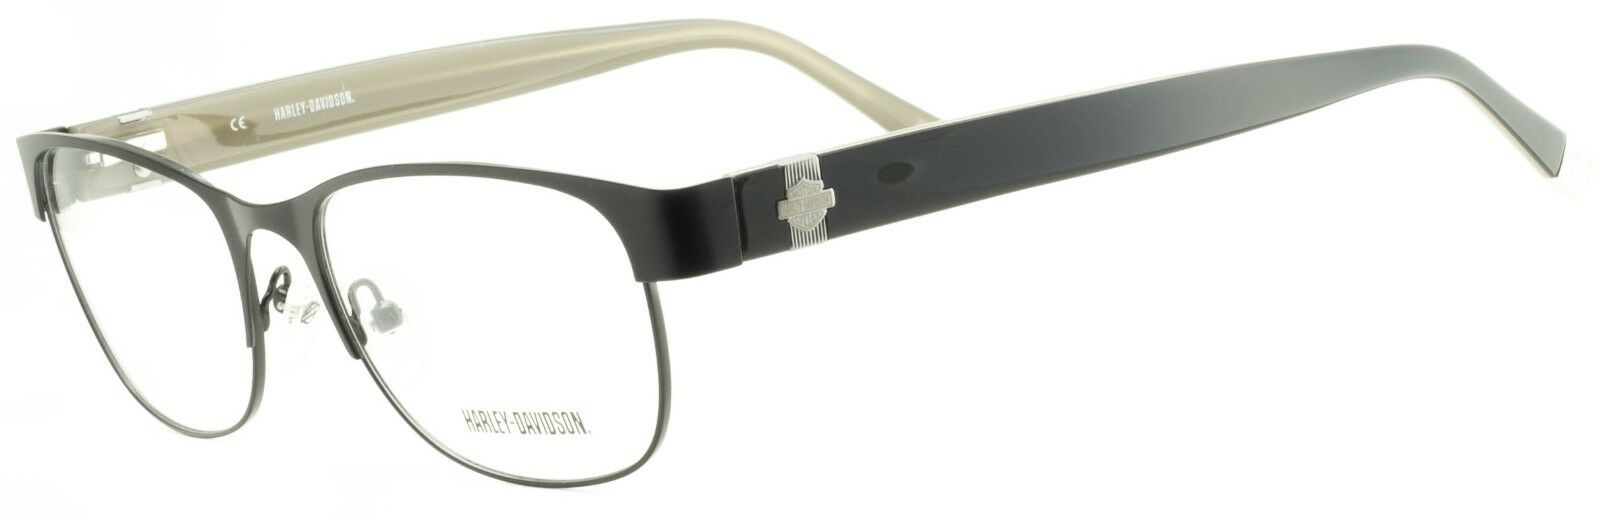 HARLEY-DAVIDSON HD 477 BLK Eyewear FRAMES RX Optical Eyeglasses Glasses New BNIB